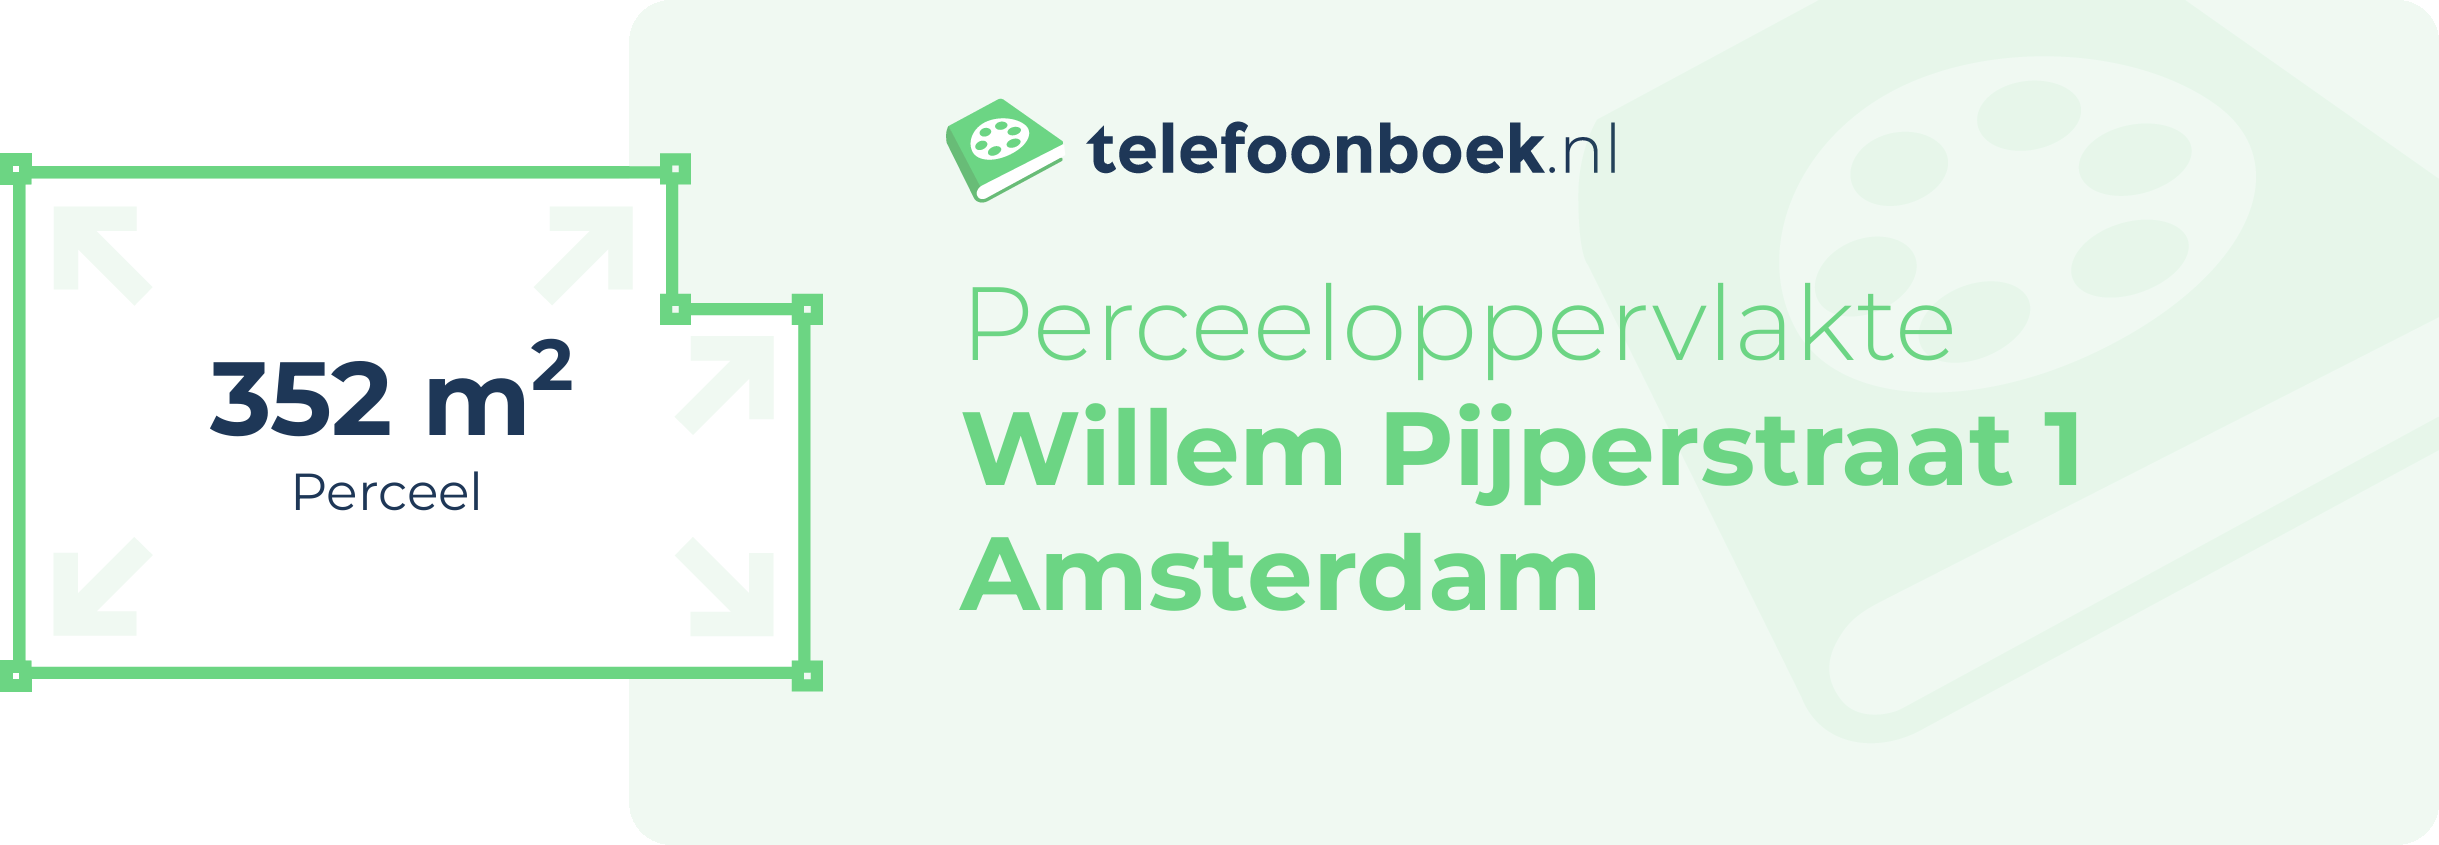 Perceeloppervlakte Willem Pijperstraat 1 Amsterdam